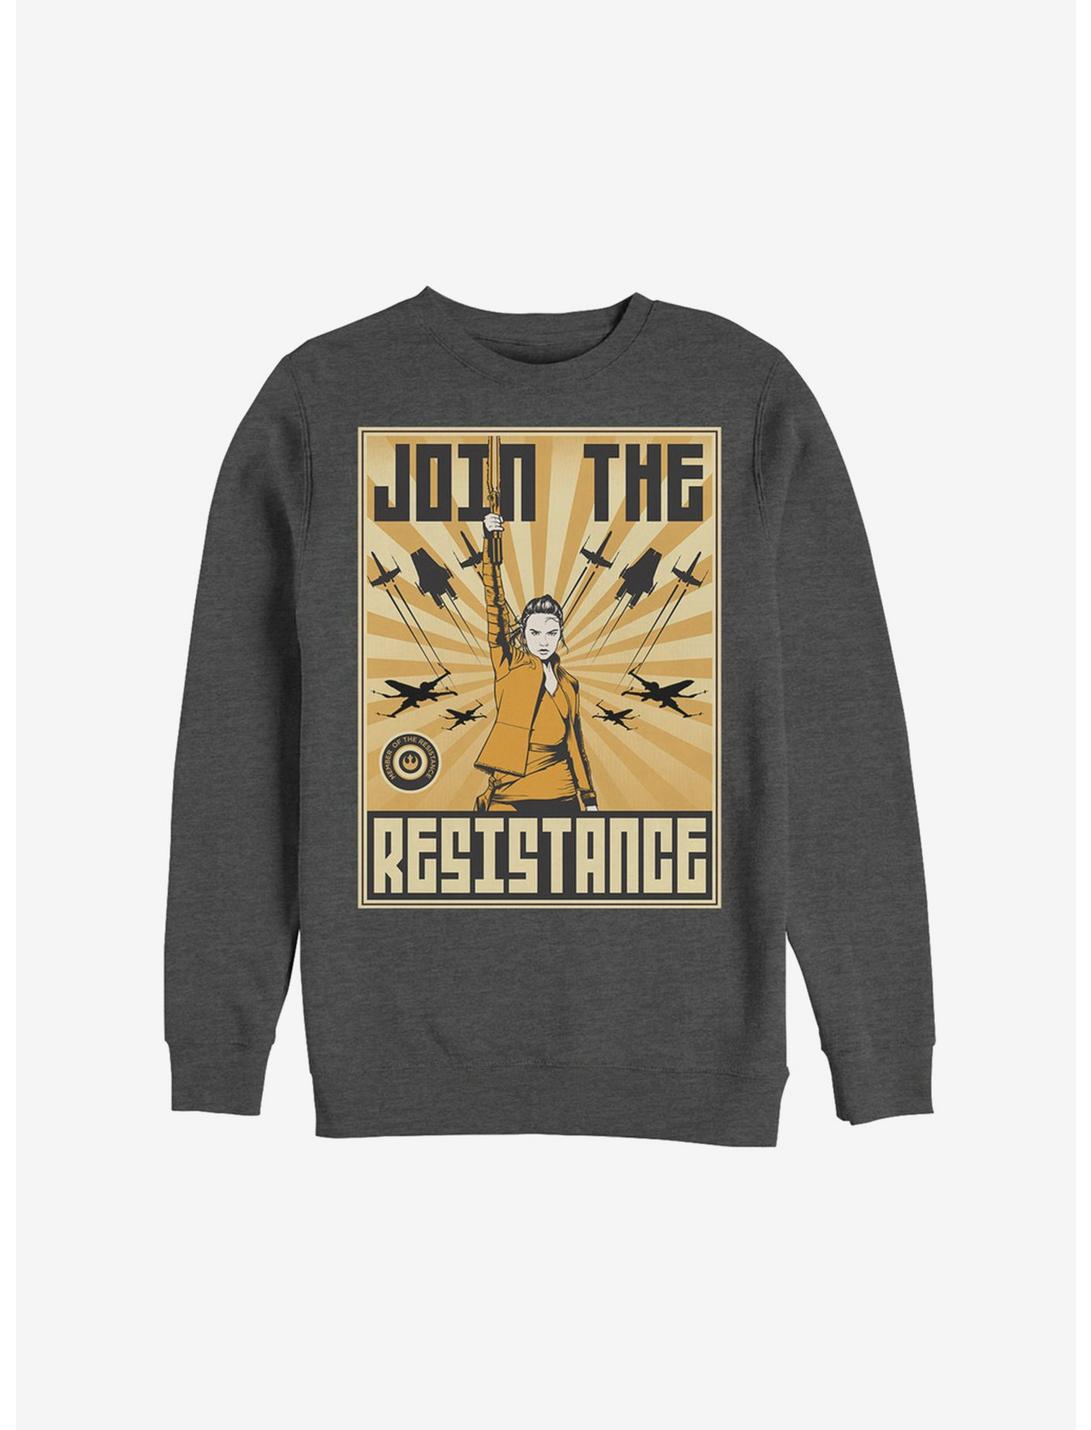 Star Wars Episode VIII The Last Jedi Resistance Sweatshirt, CHAR HTR, hi-res